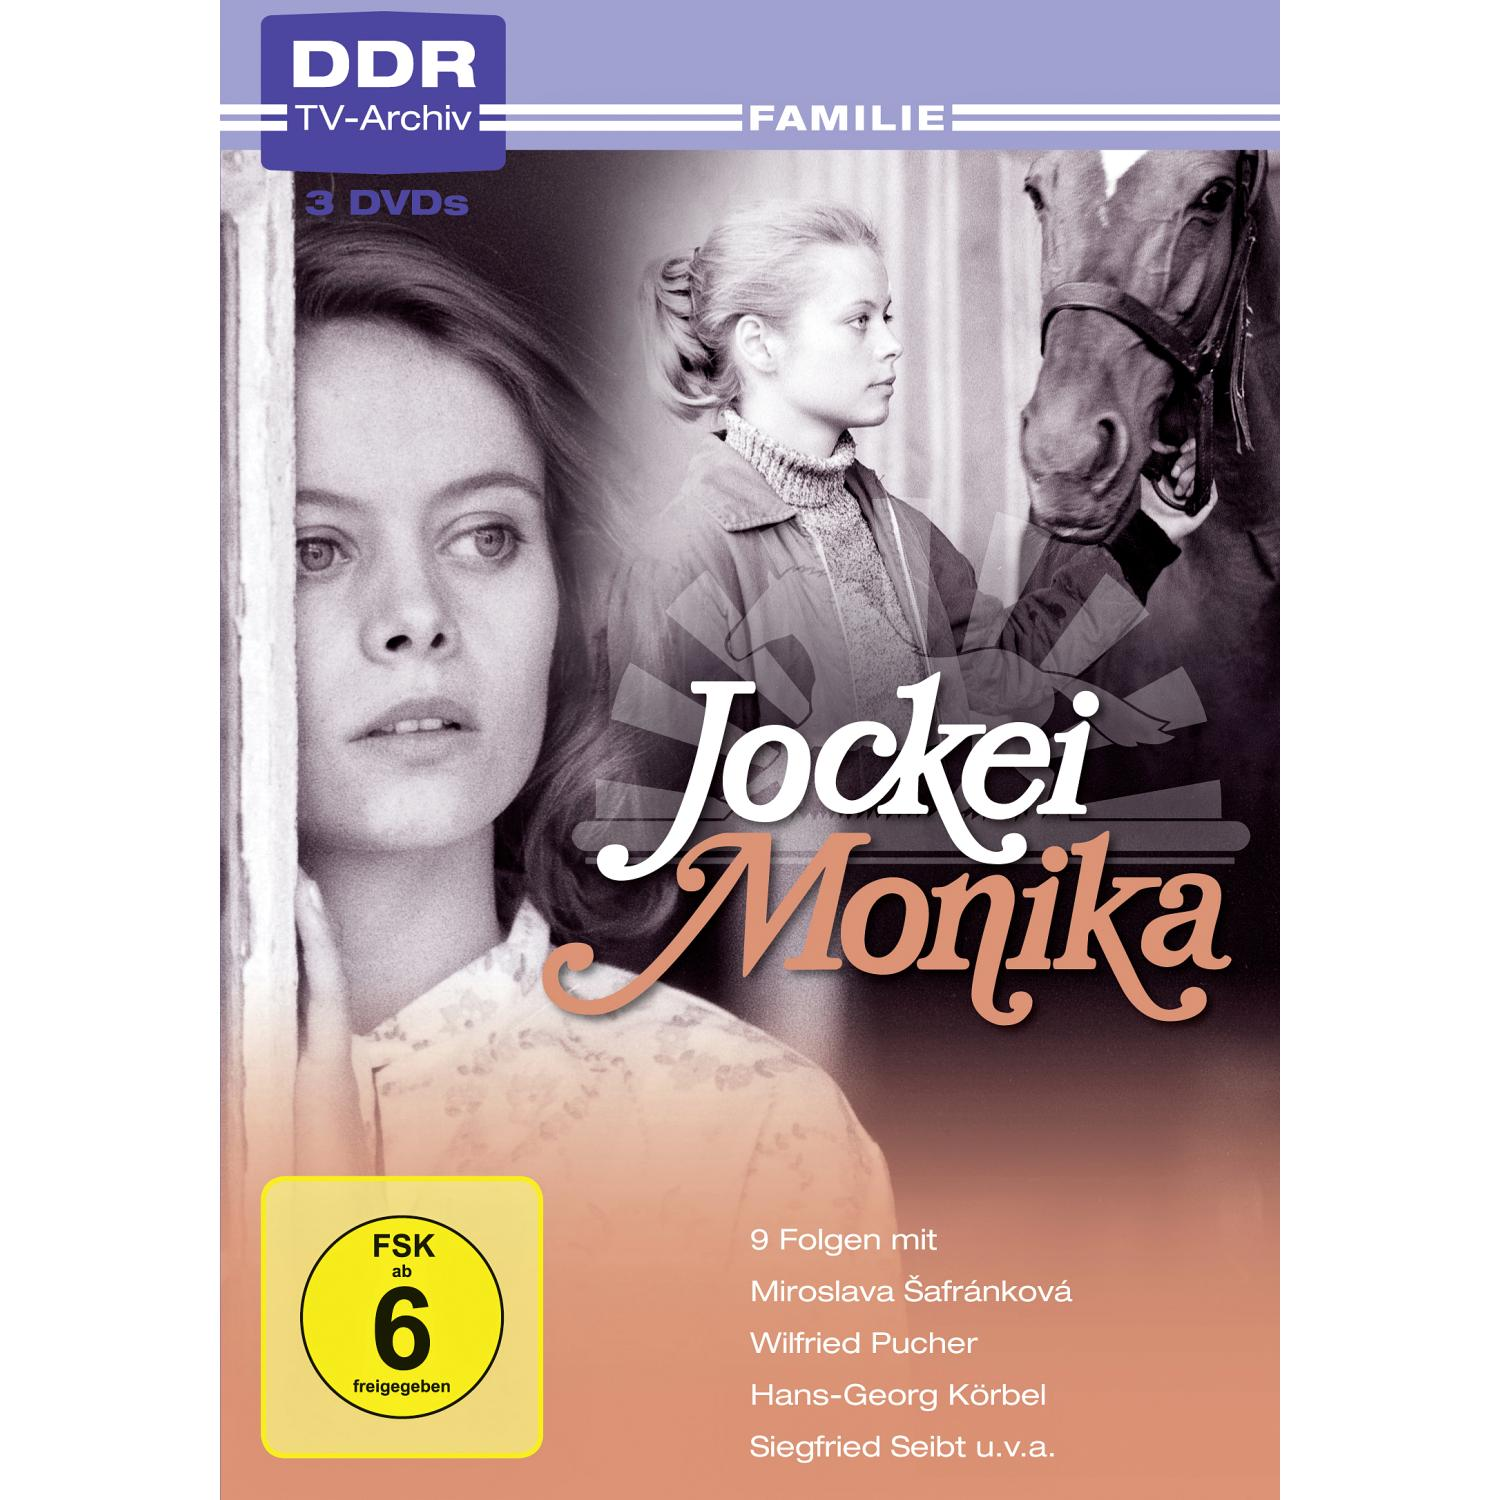 JOCKEI MONIKA TV-ARCHIV) DVD (DDR